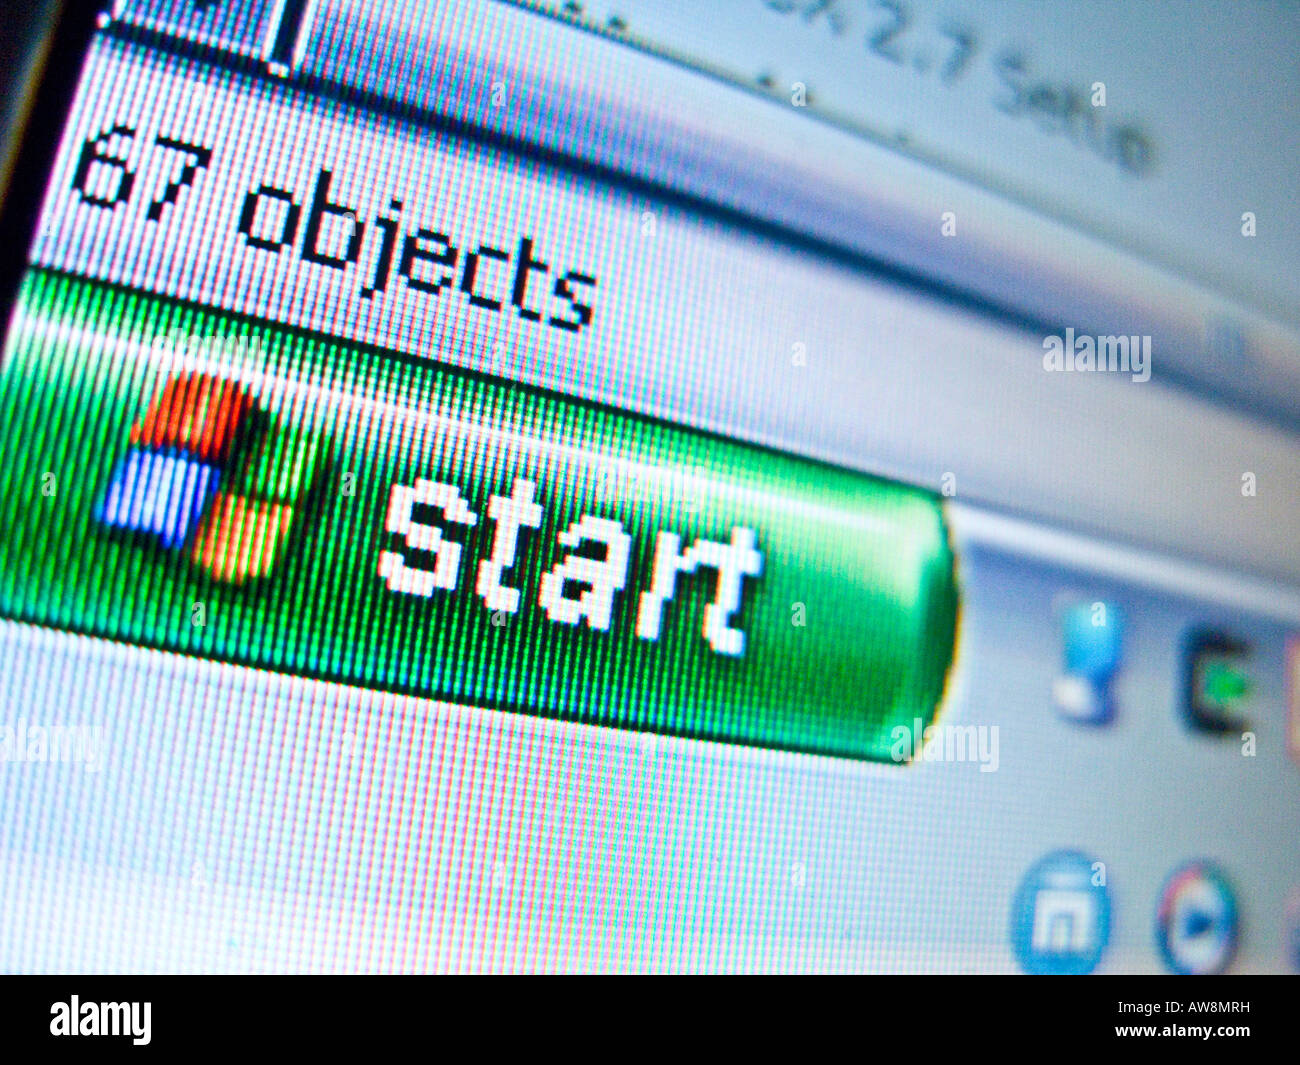 cowboy Whose Towards Microsoft Windows XP Start button Stock Photo - Alamy